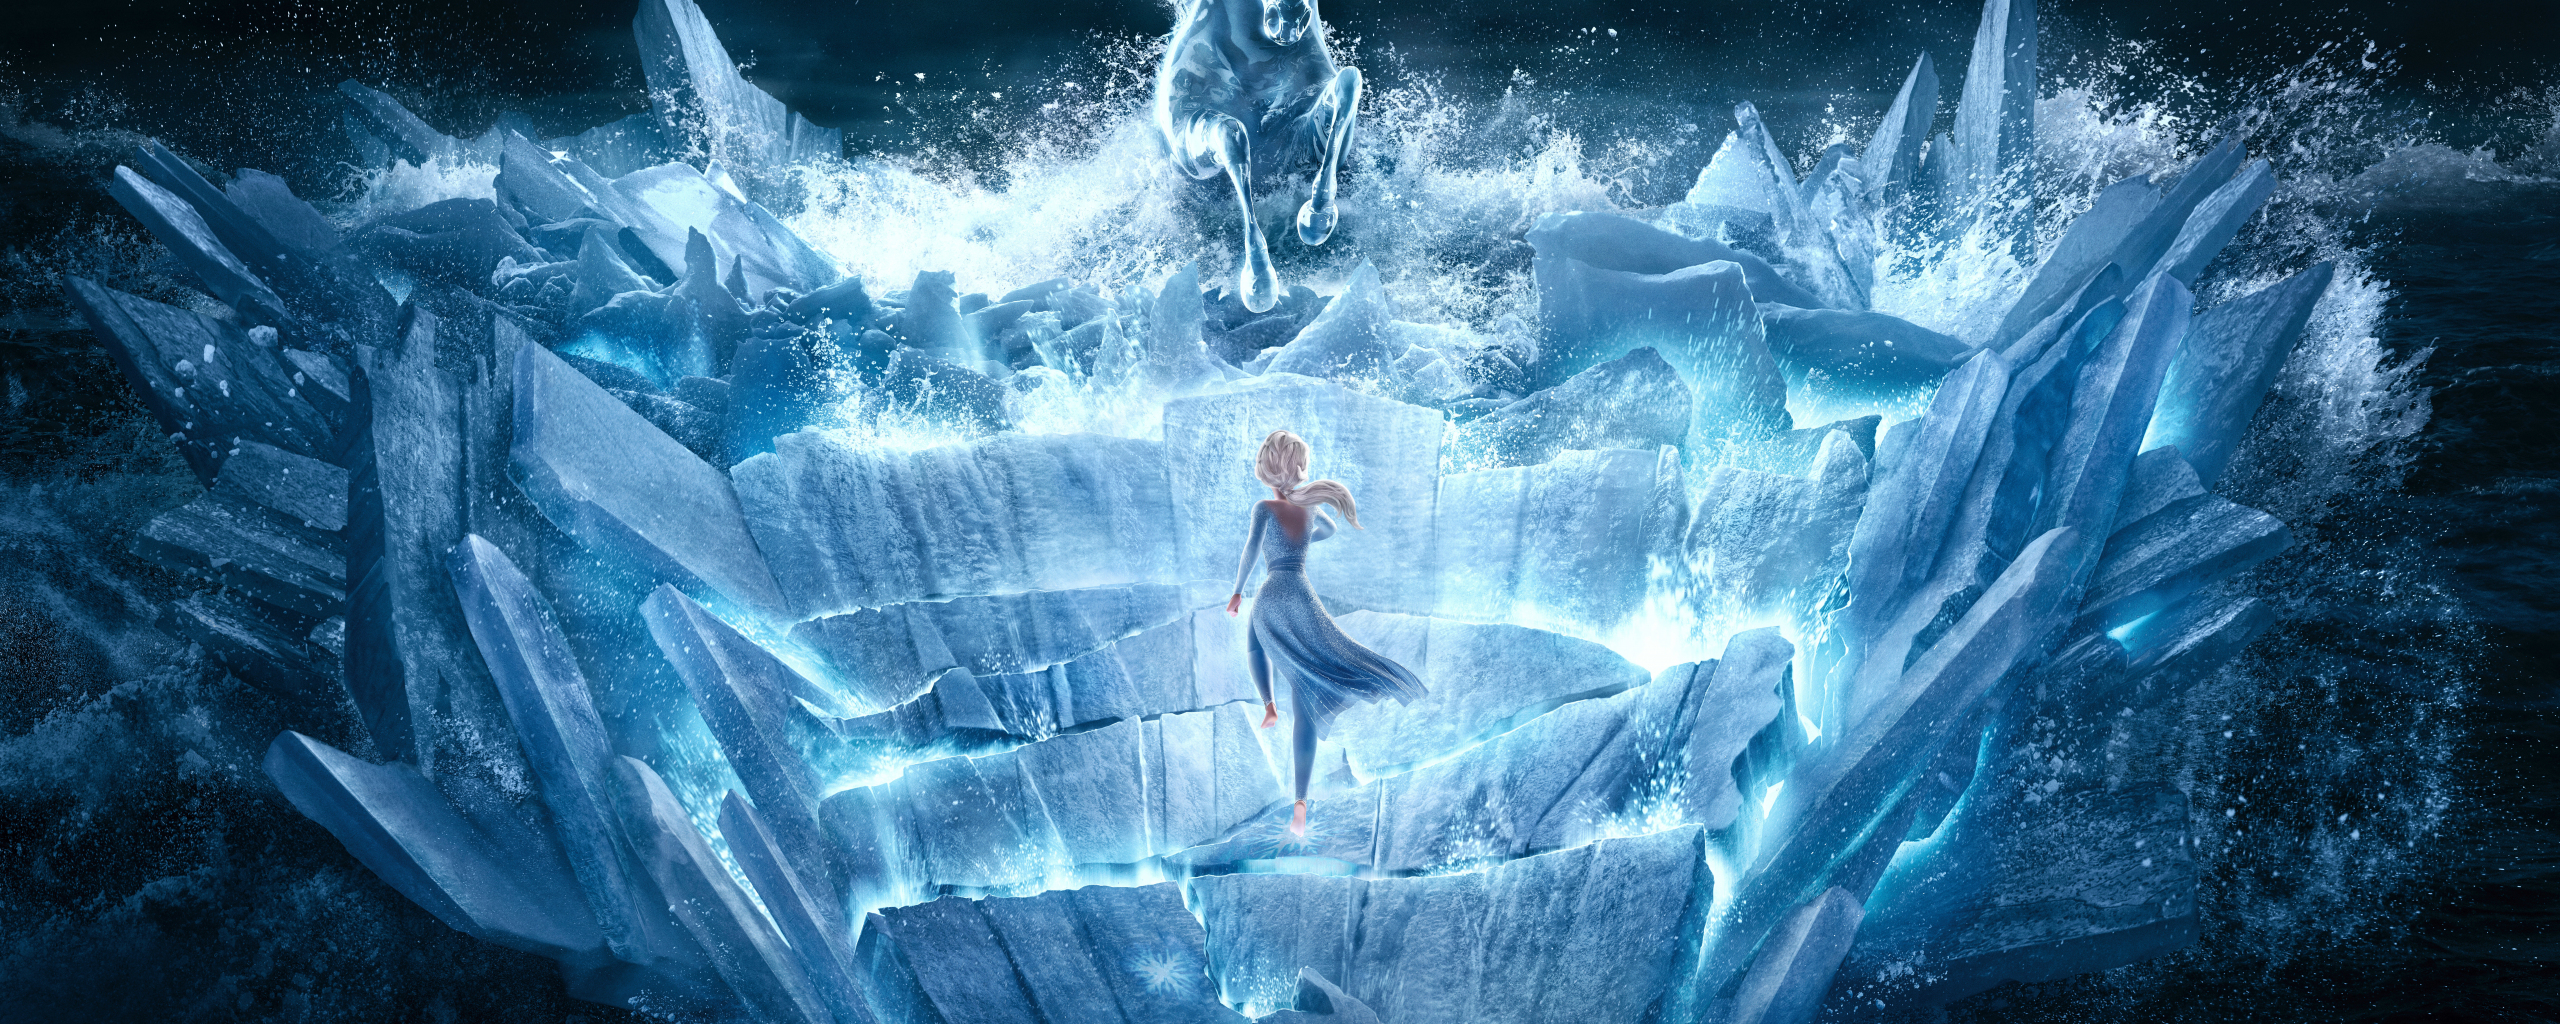 Frozen movie, snow horse, sea ride, 2560x1024 wallpaper